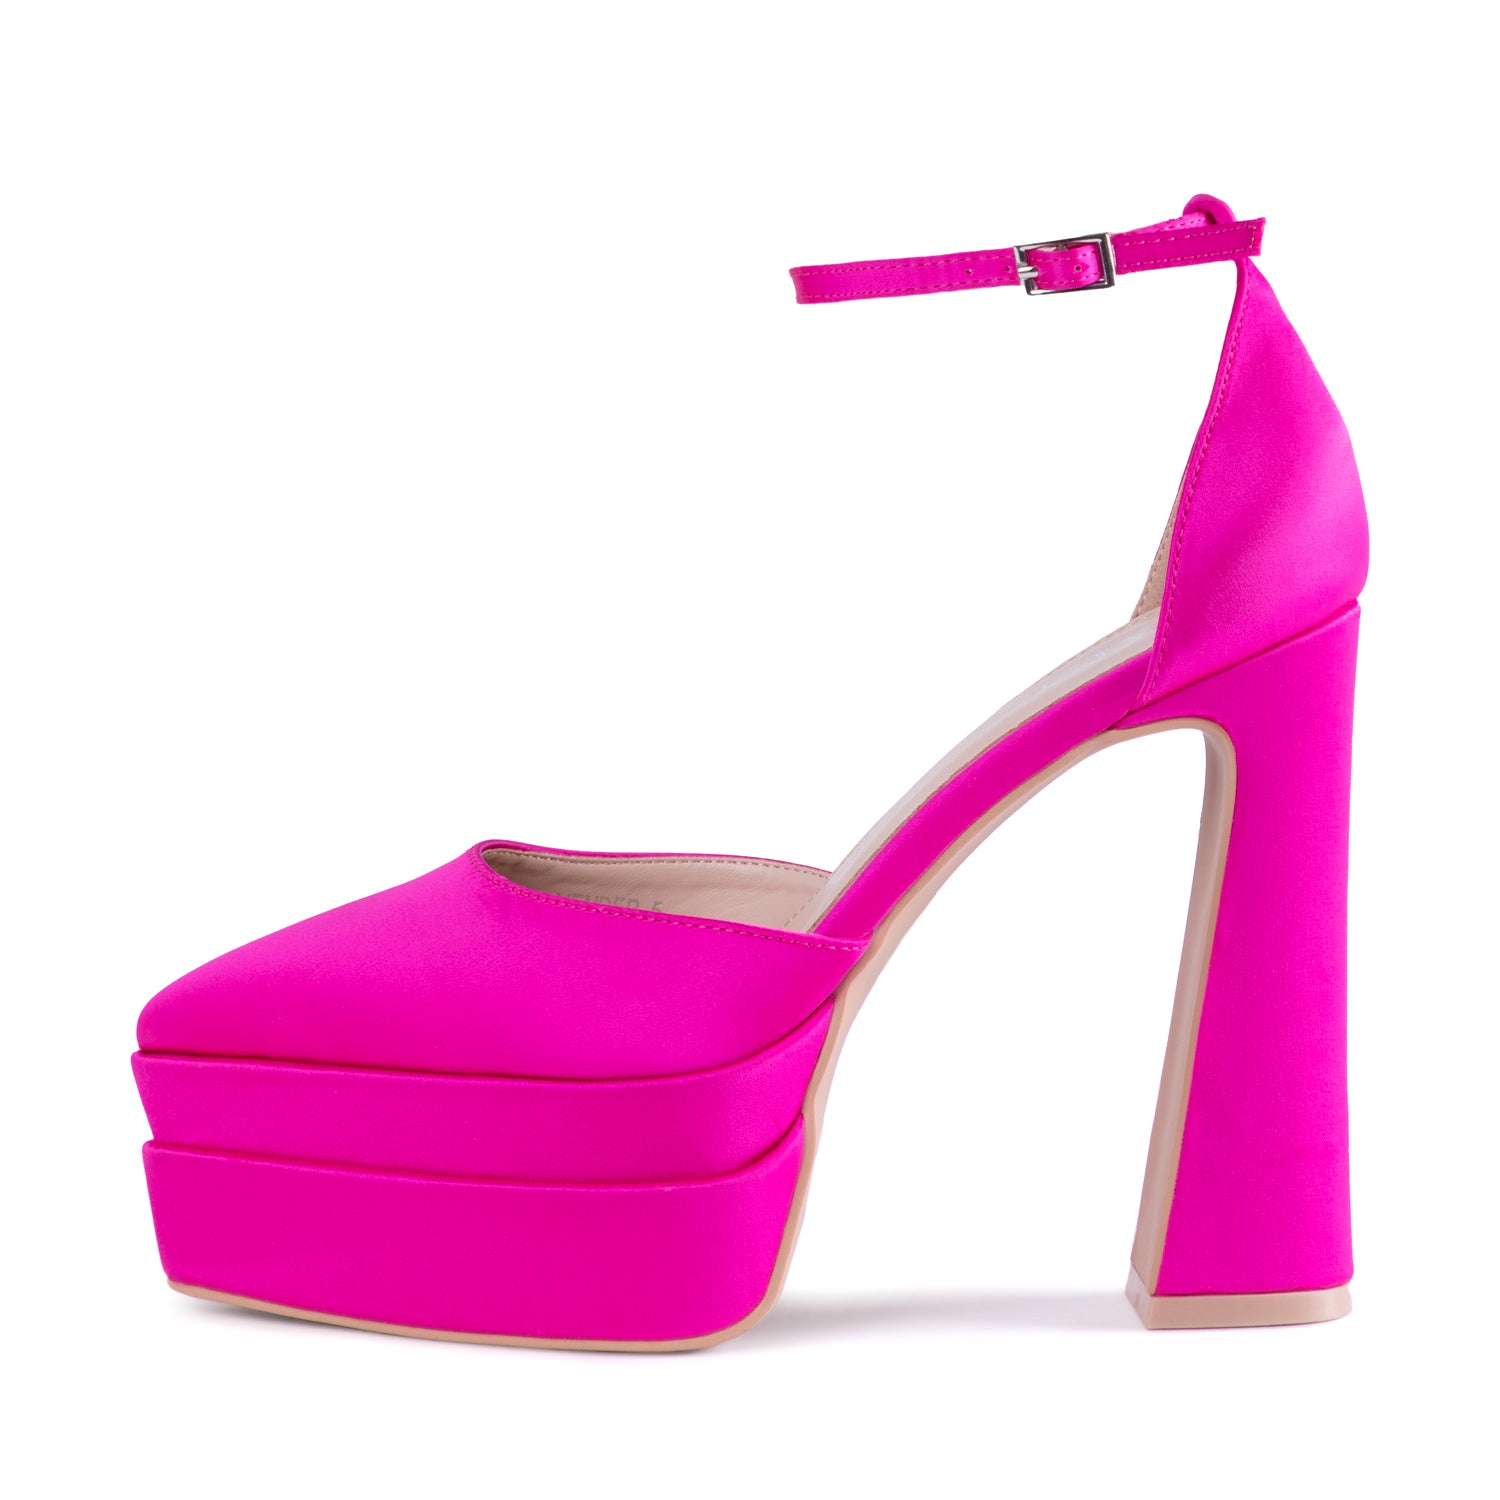 RAID Lavender Platform Heel in Hot Pink